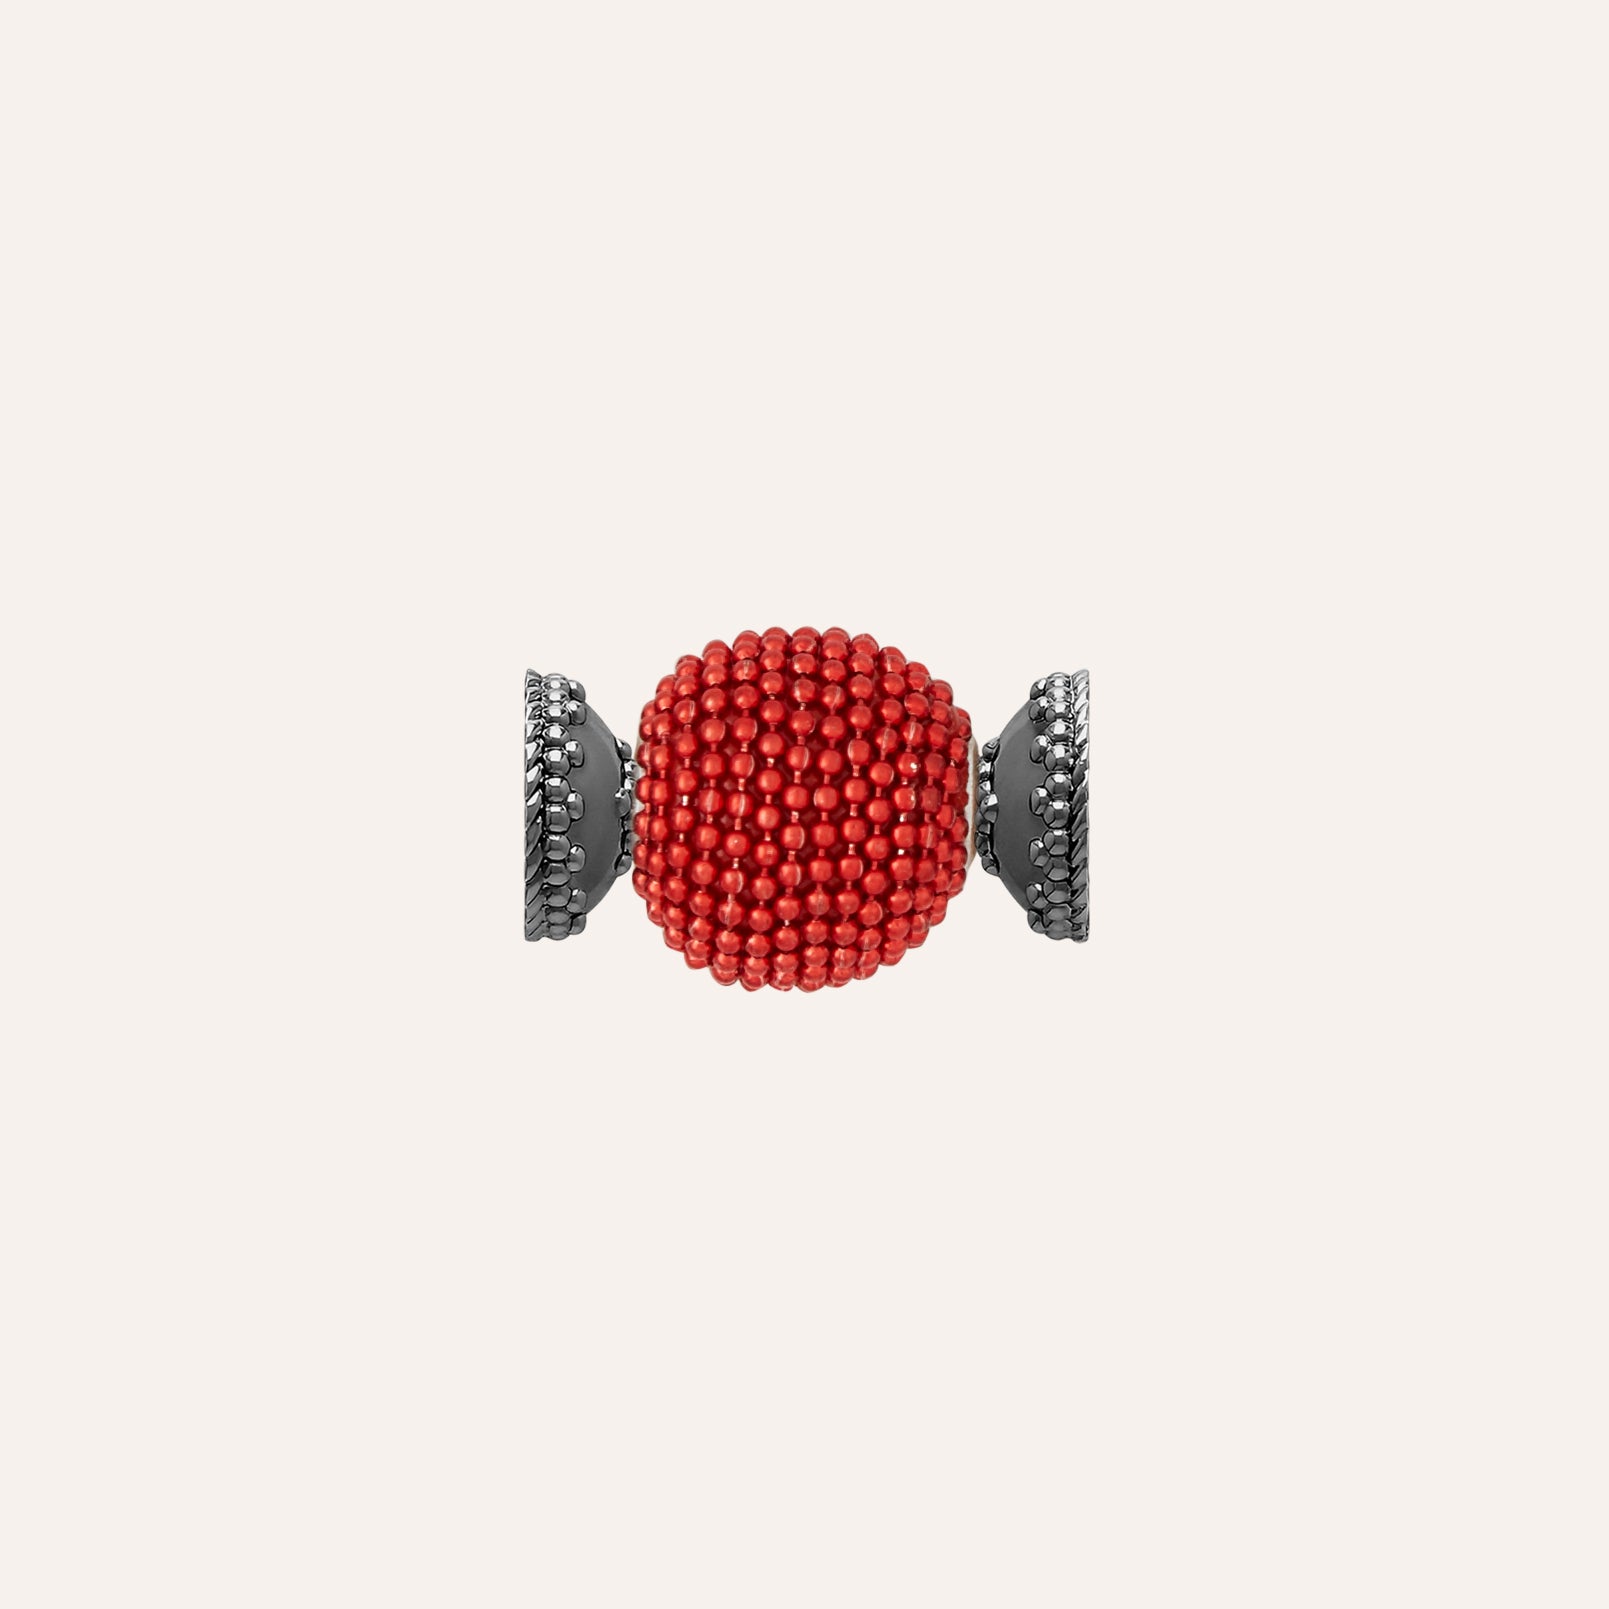 Caviar Red Bead 18mm Gunmetal Centerpiece